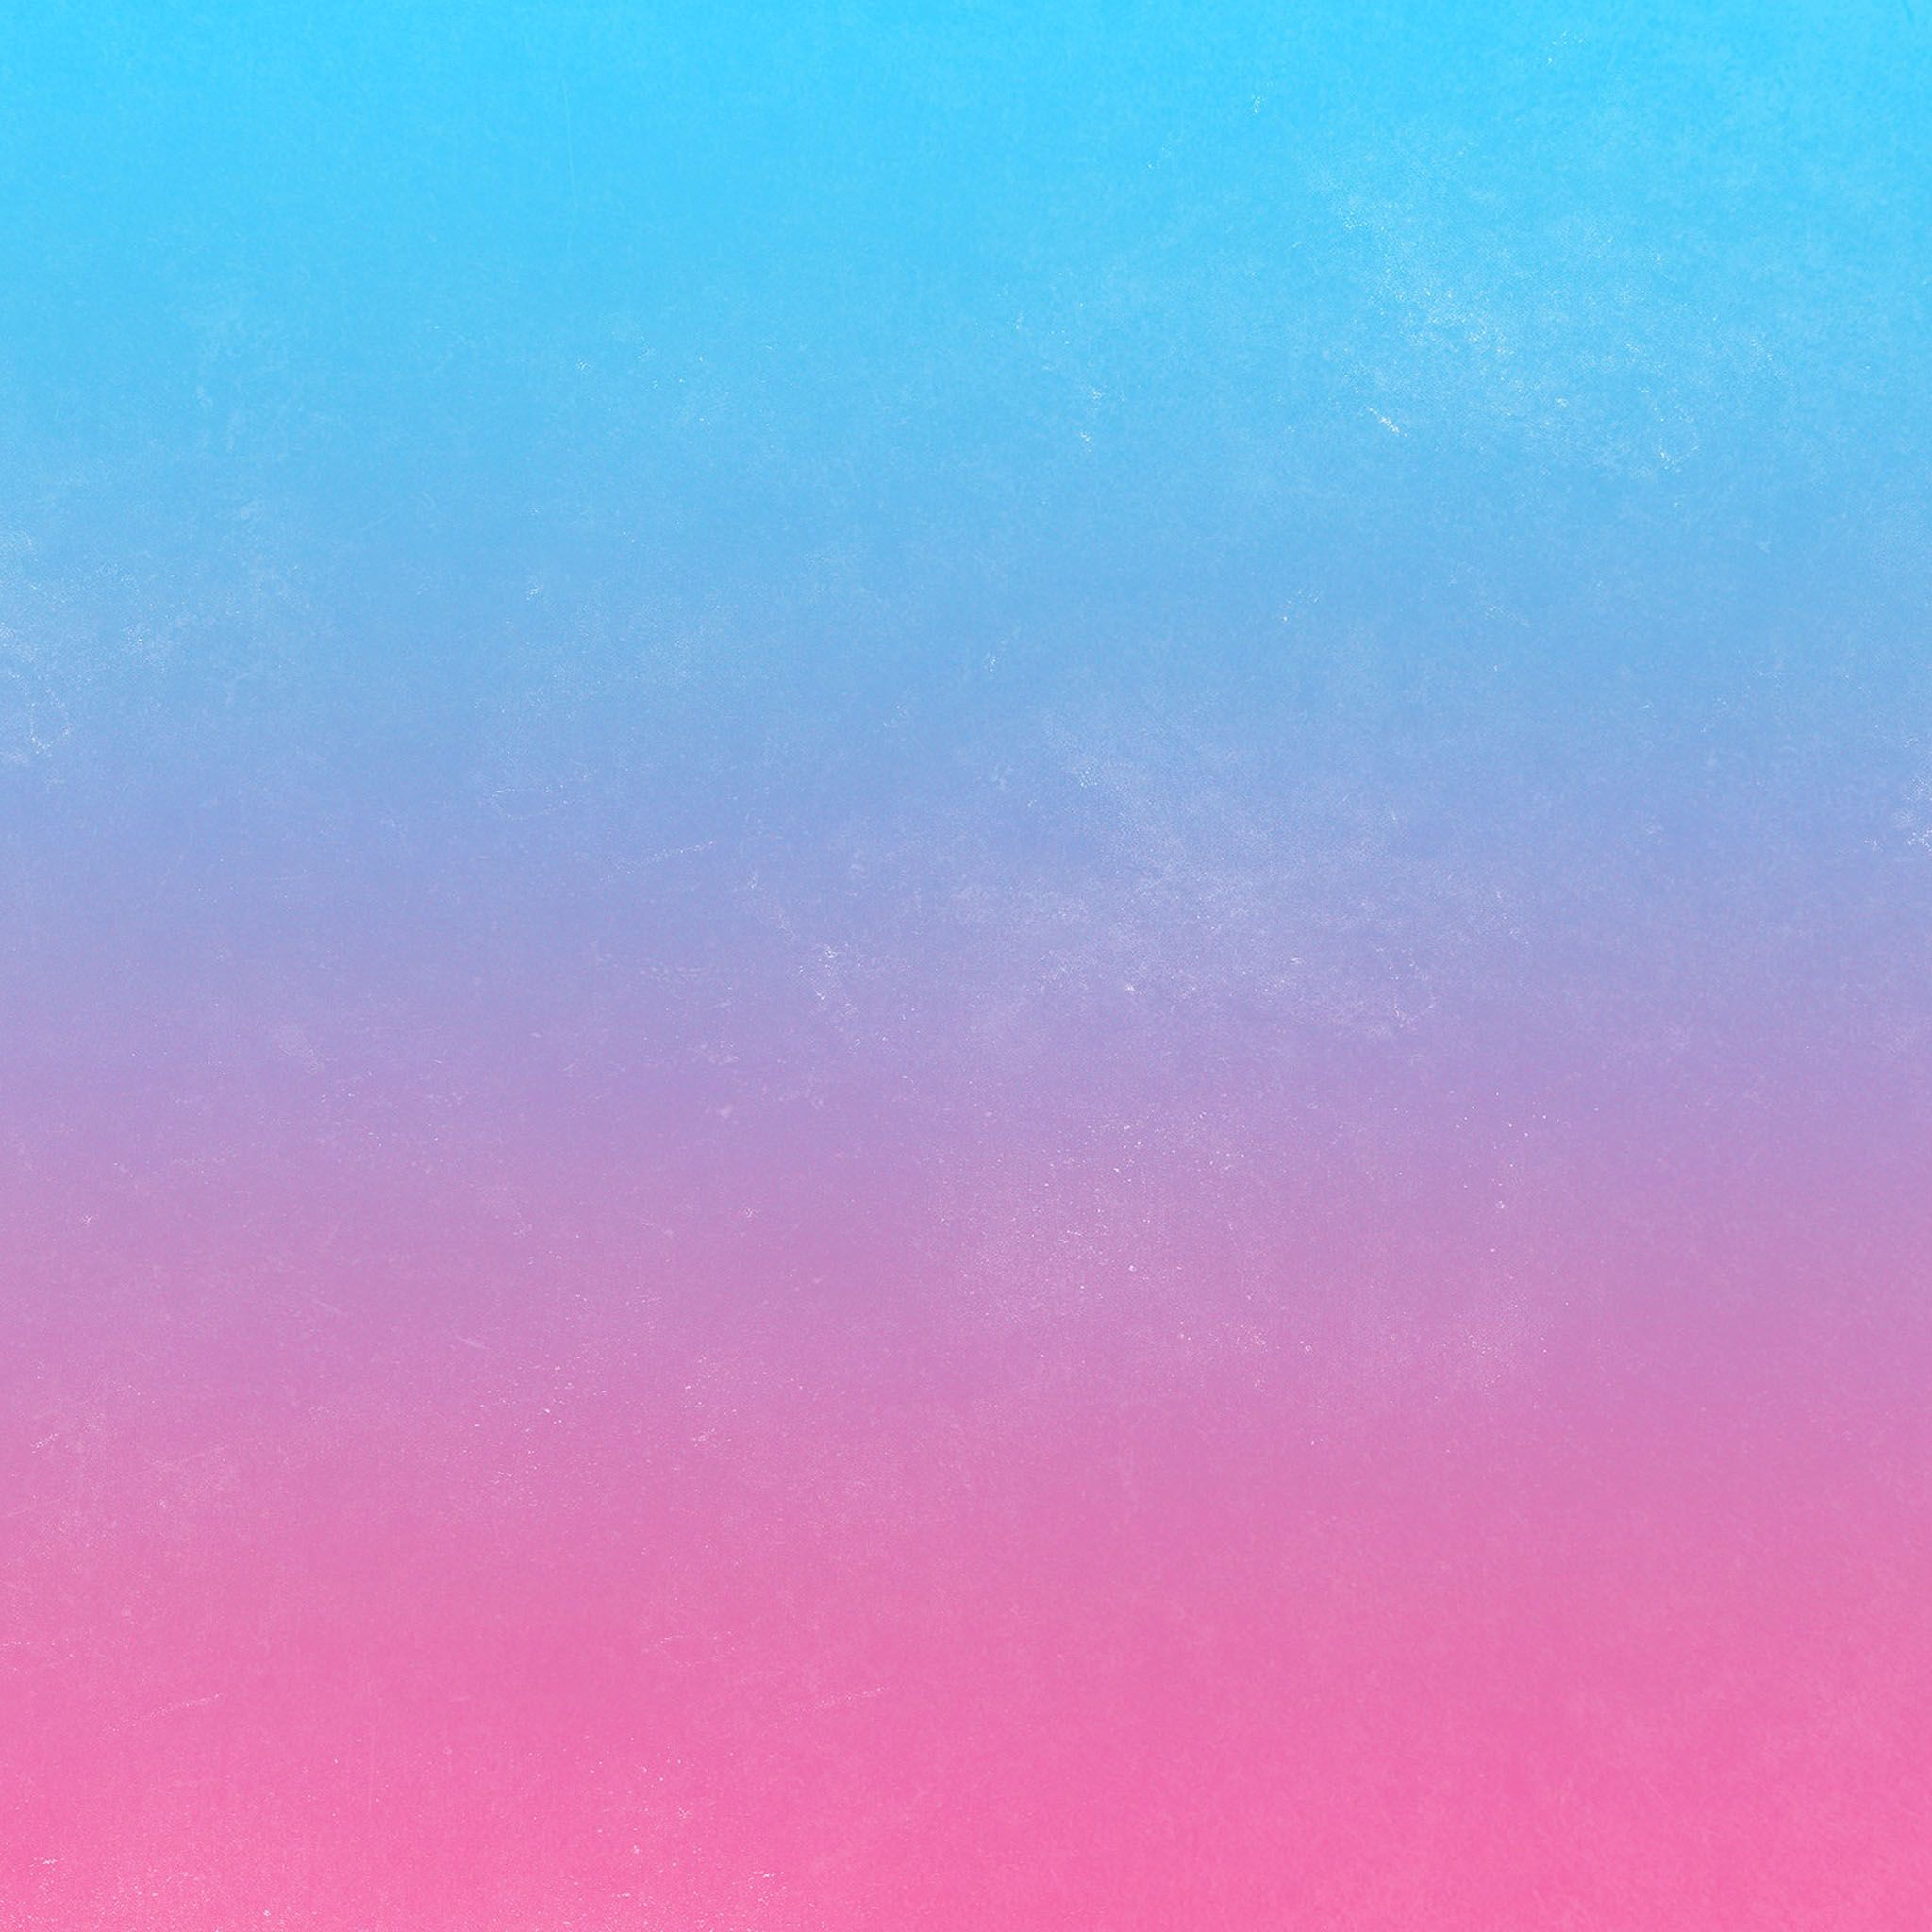 Aesthetic Blue Pink Wallpaper 2020